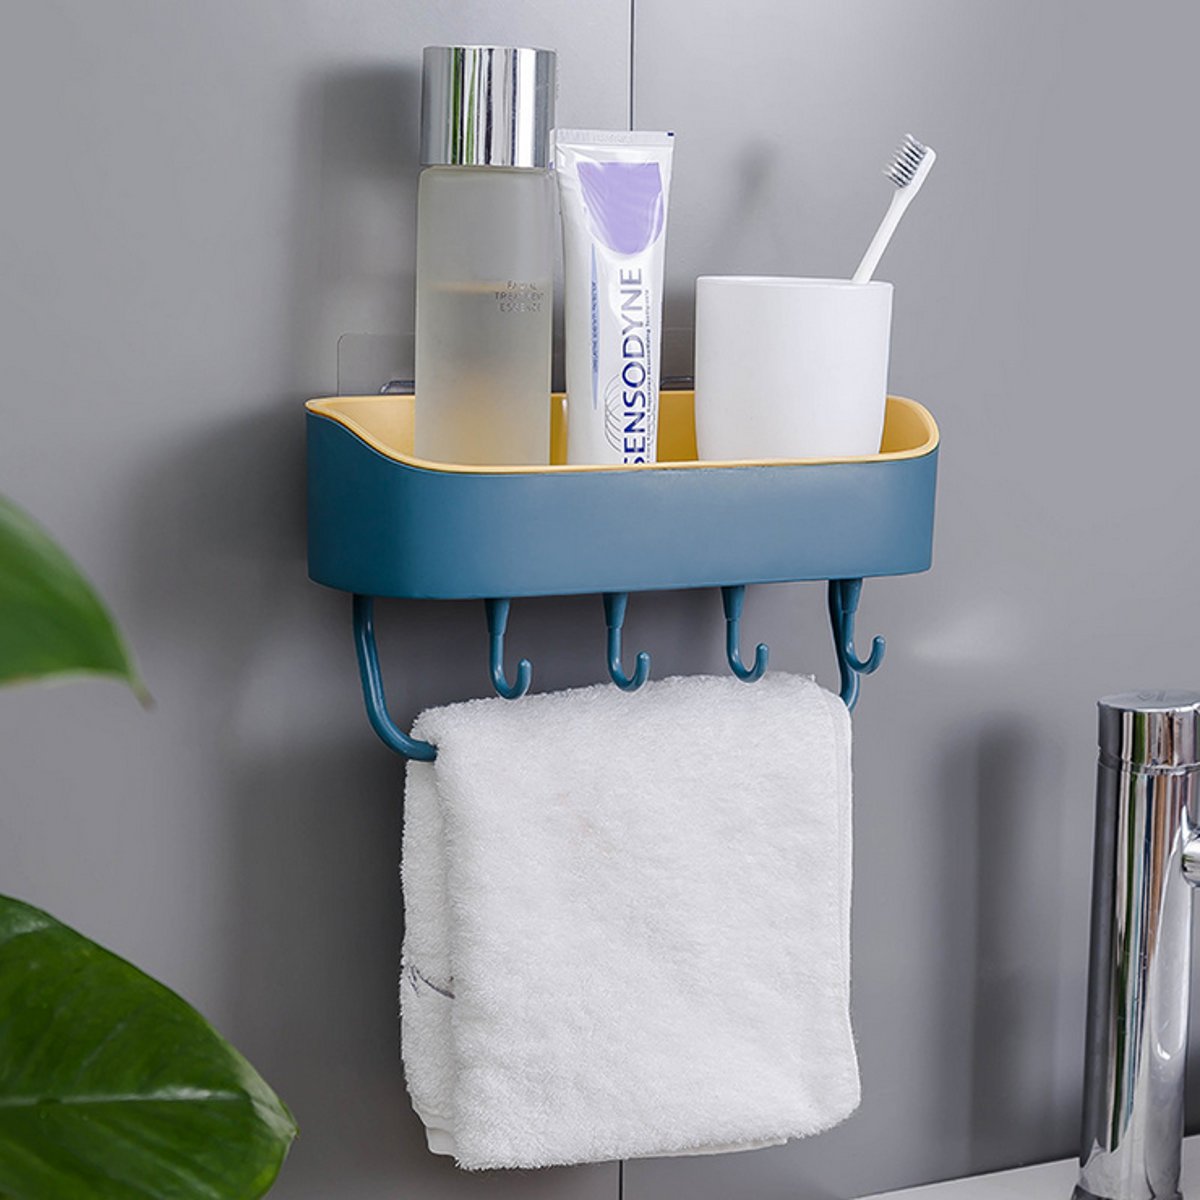 Self-adhesive-Wall-Hanging-Storage-Rack-Shelf-Hook-Home-Kitchen-Holder-Organizer-Towel-Holder-1552900-6